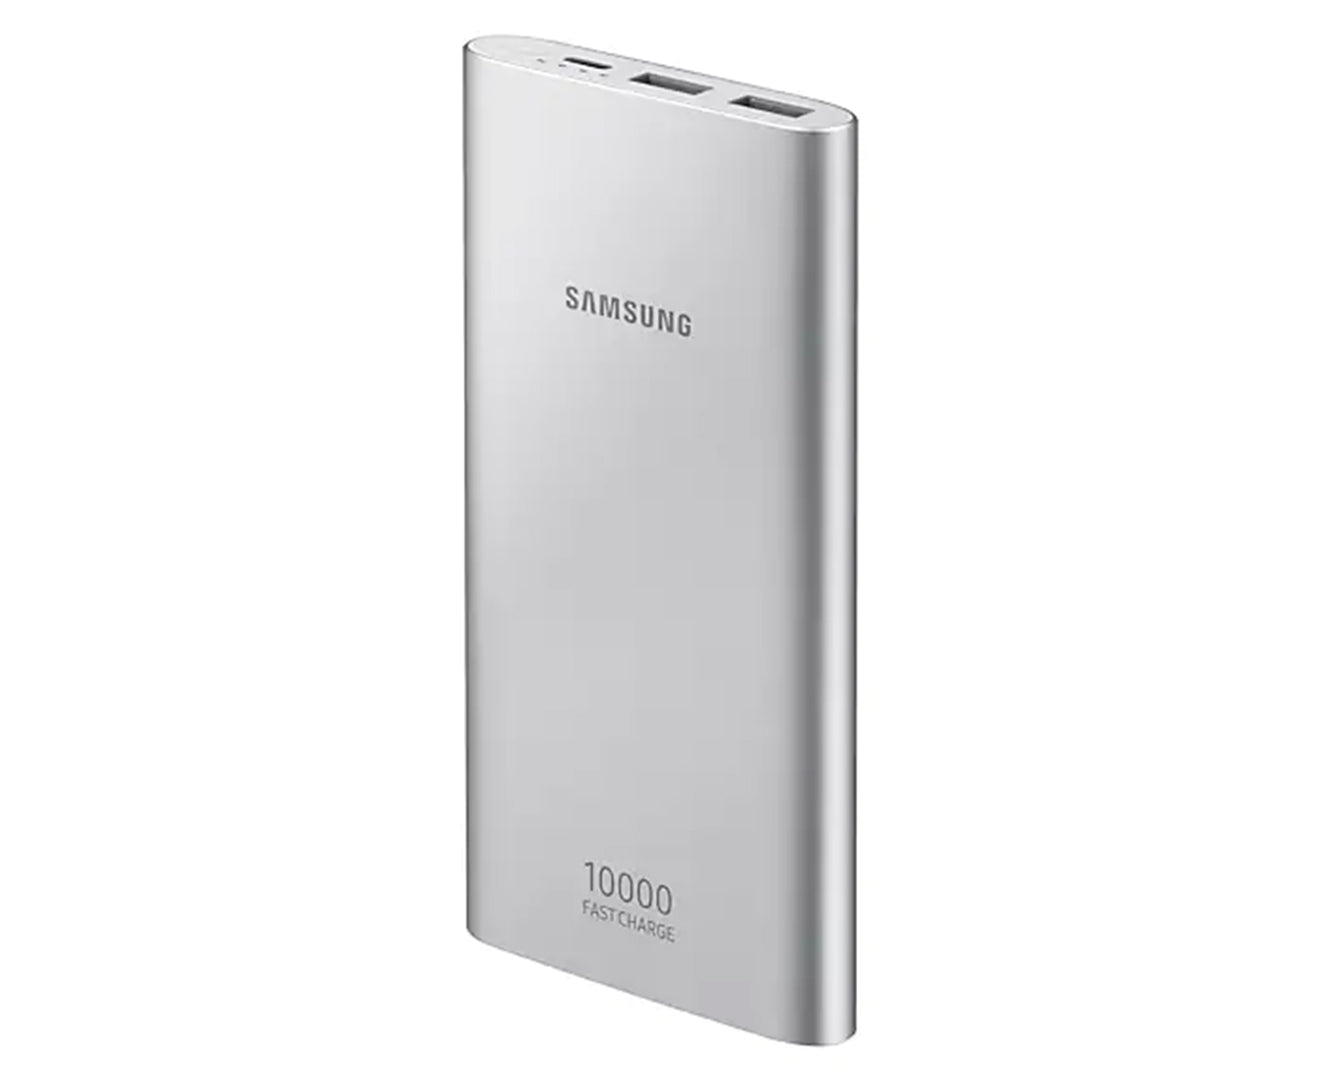 Samsung 10000mAh Type C Dual Port Battery Pack